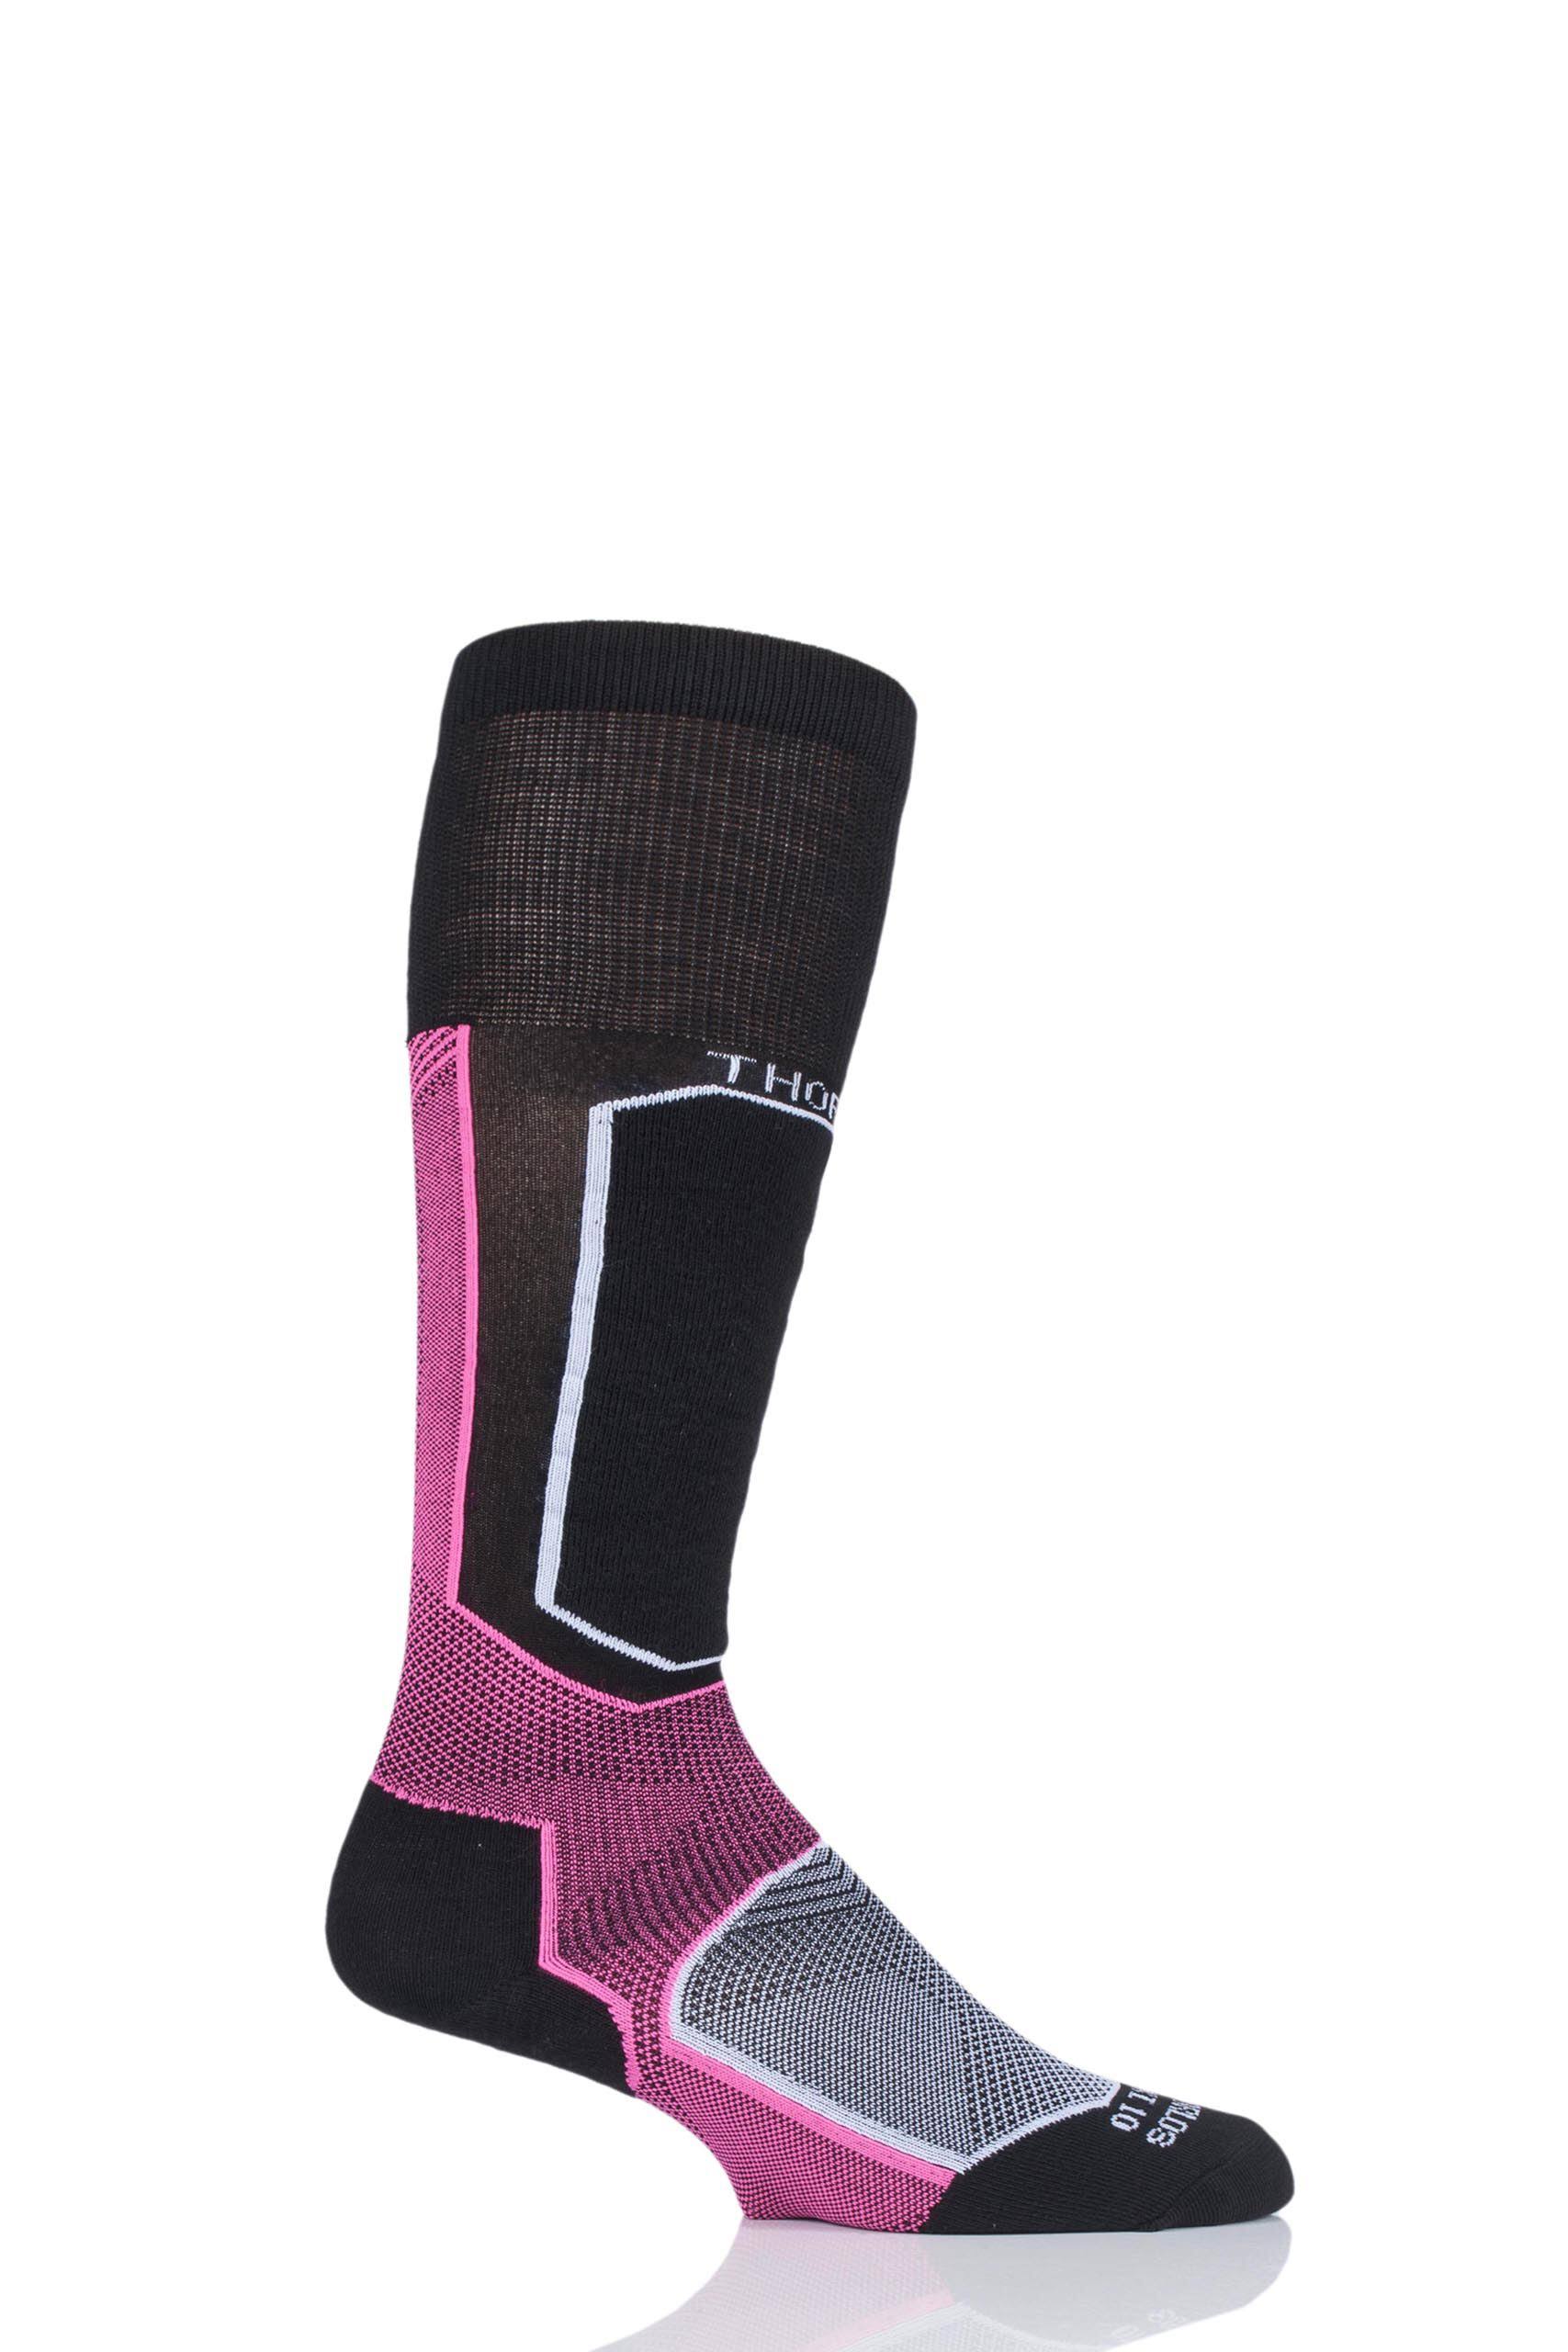 Thorlo Extreme Ski Women's Socks